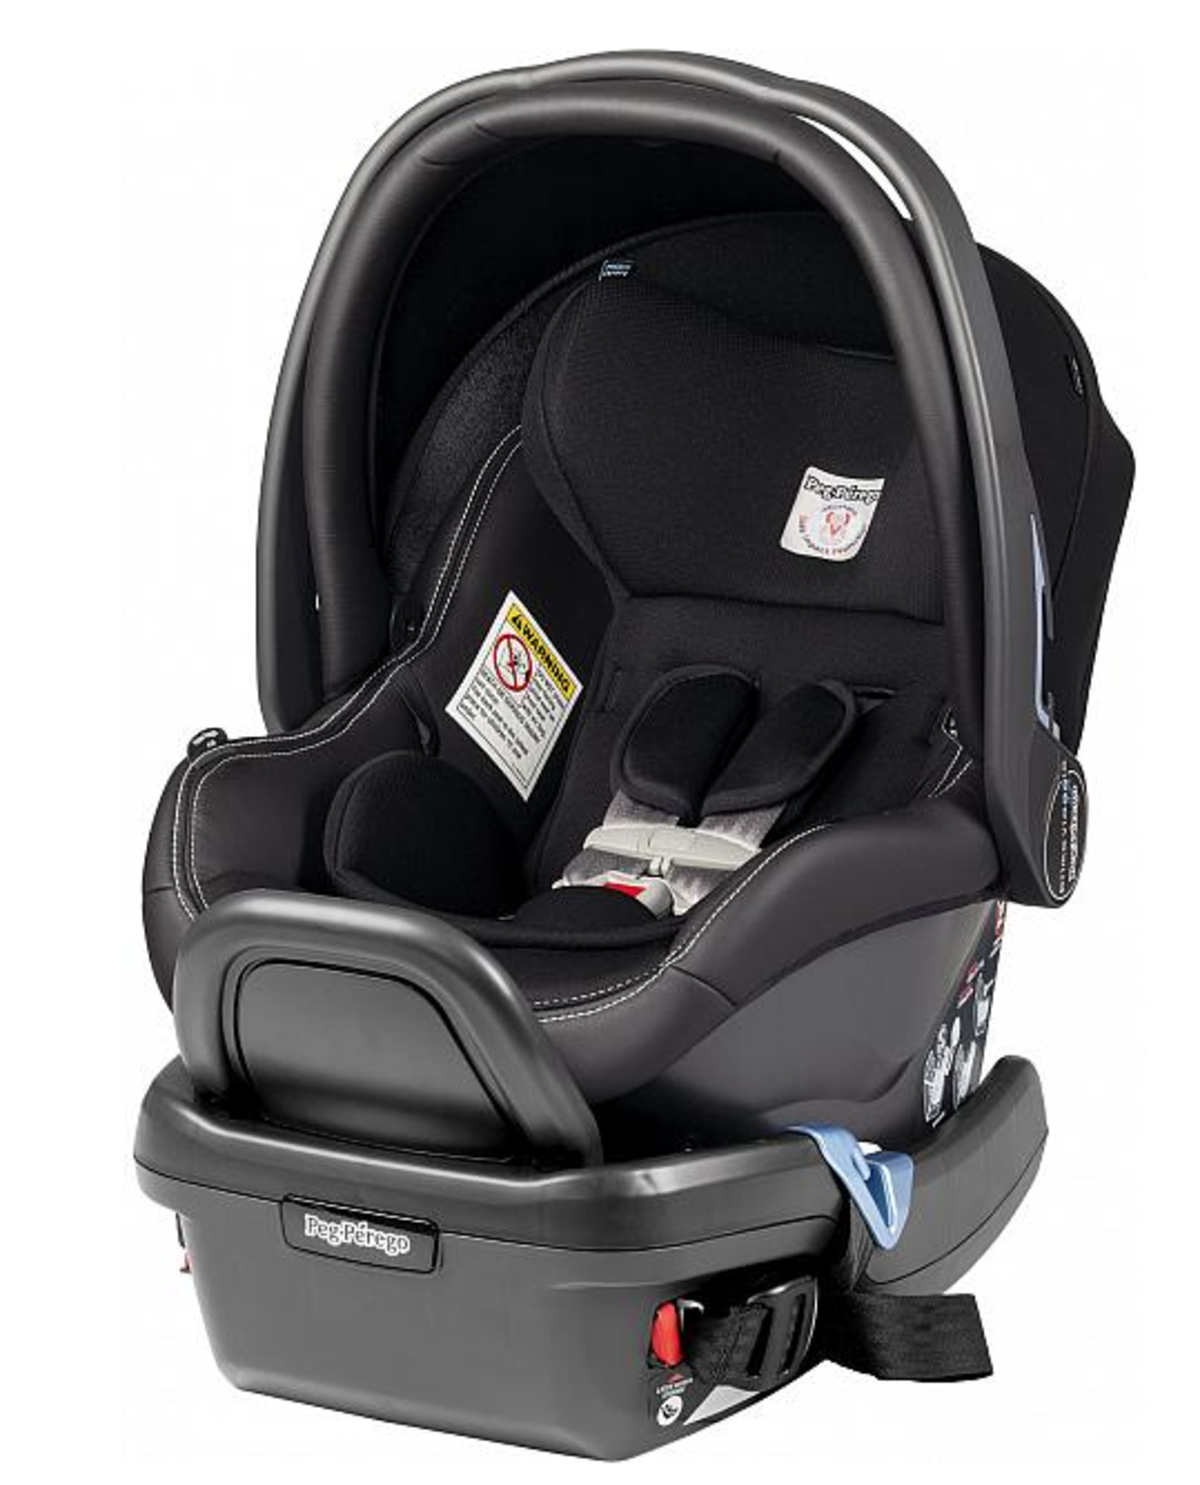 Headline for Safest Car Seats For Infants 2014